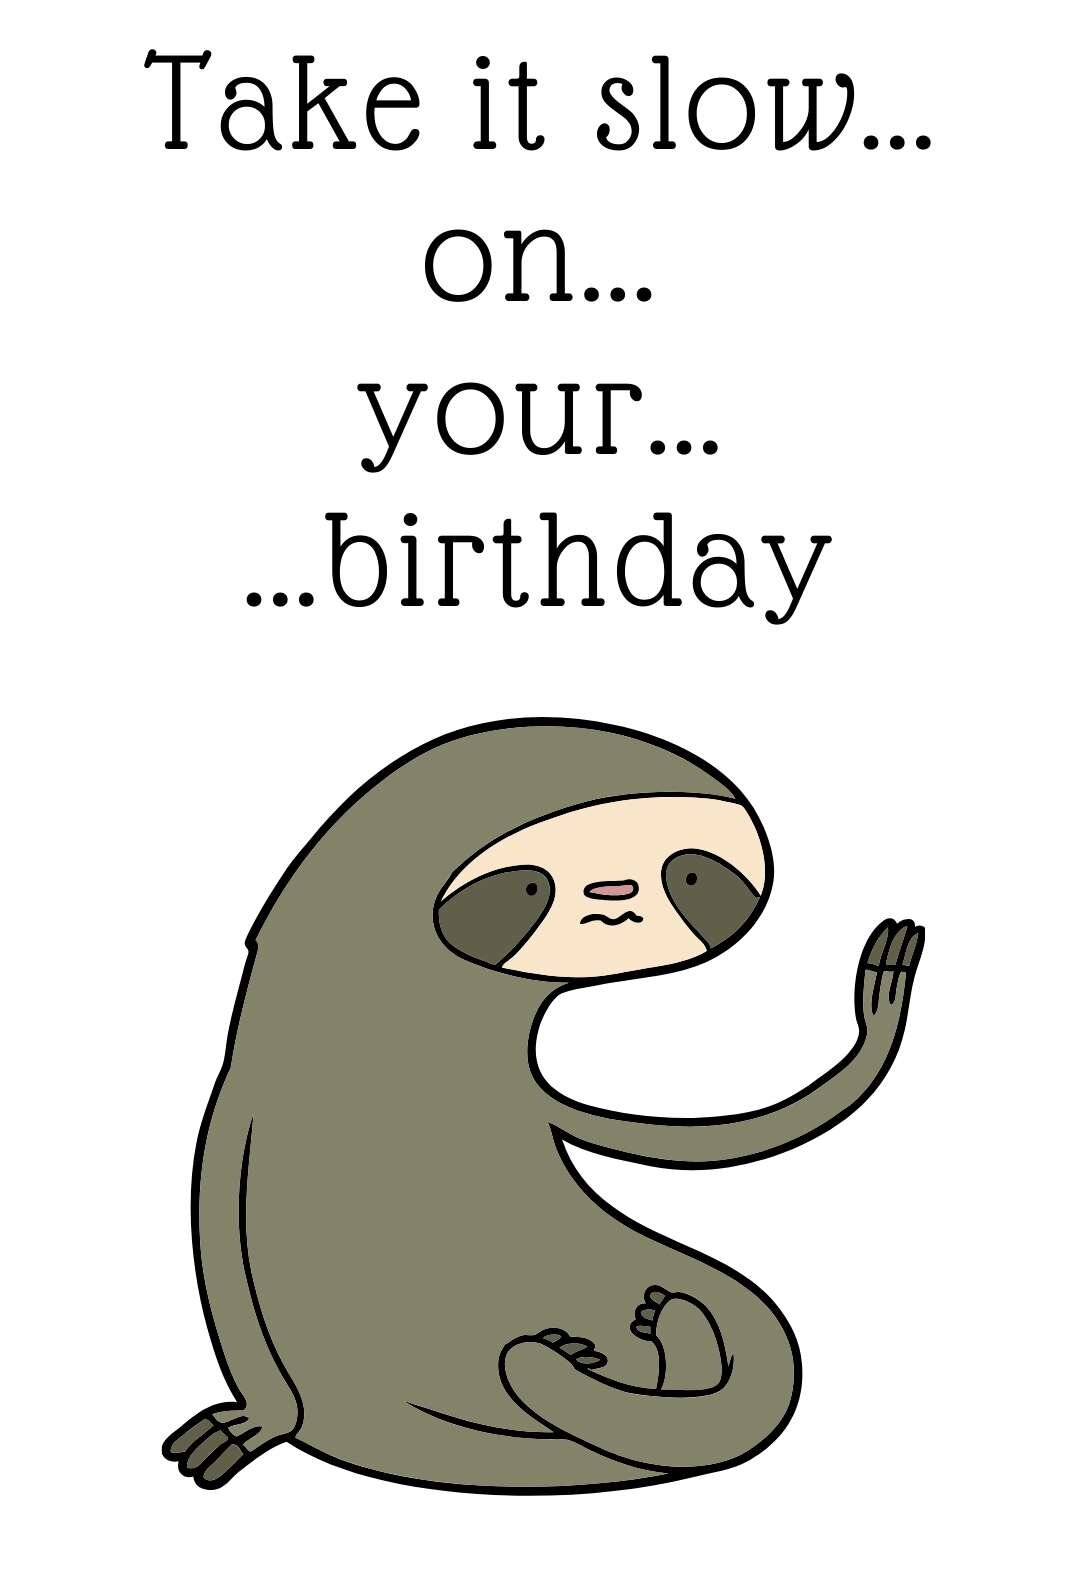 100 S Of Funny Printable Birthday Cards Free Printbirthday Cards